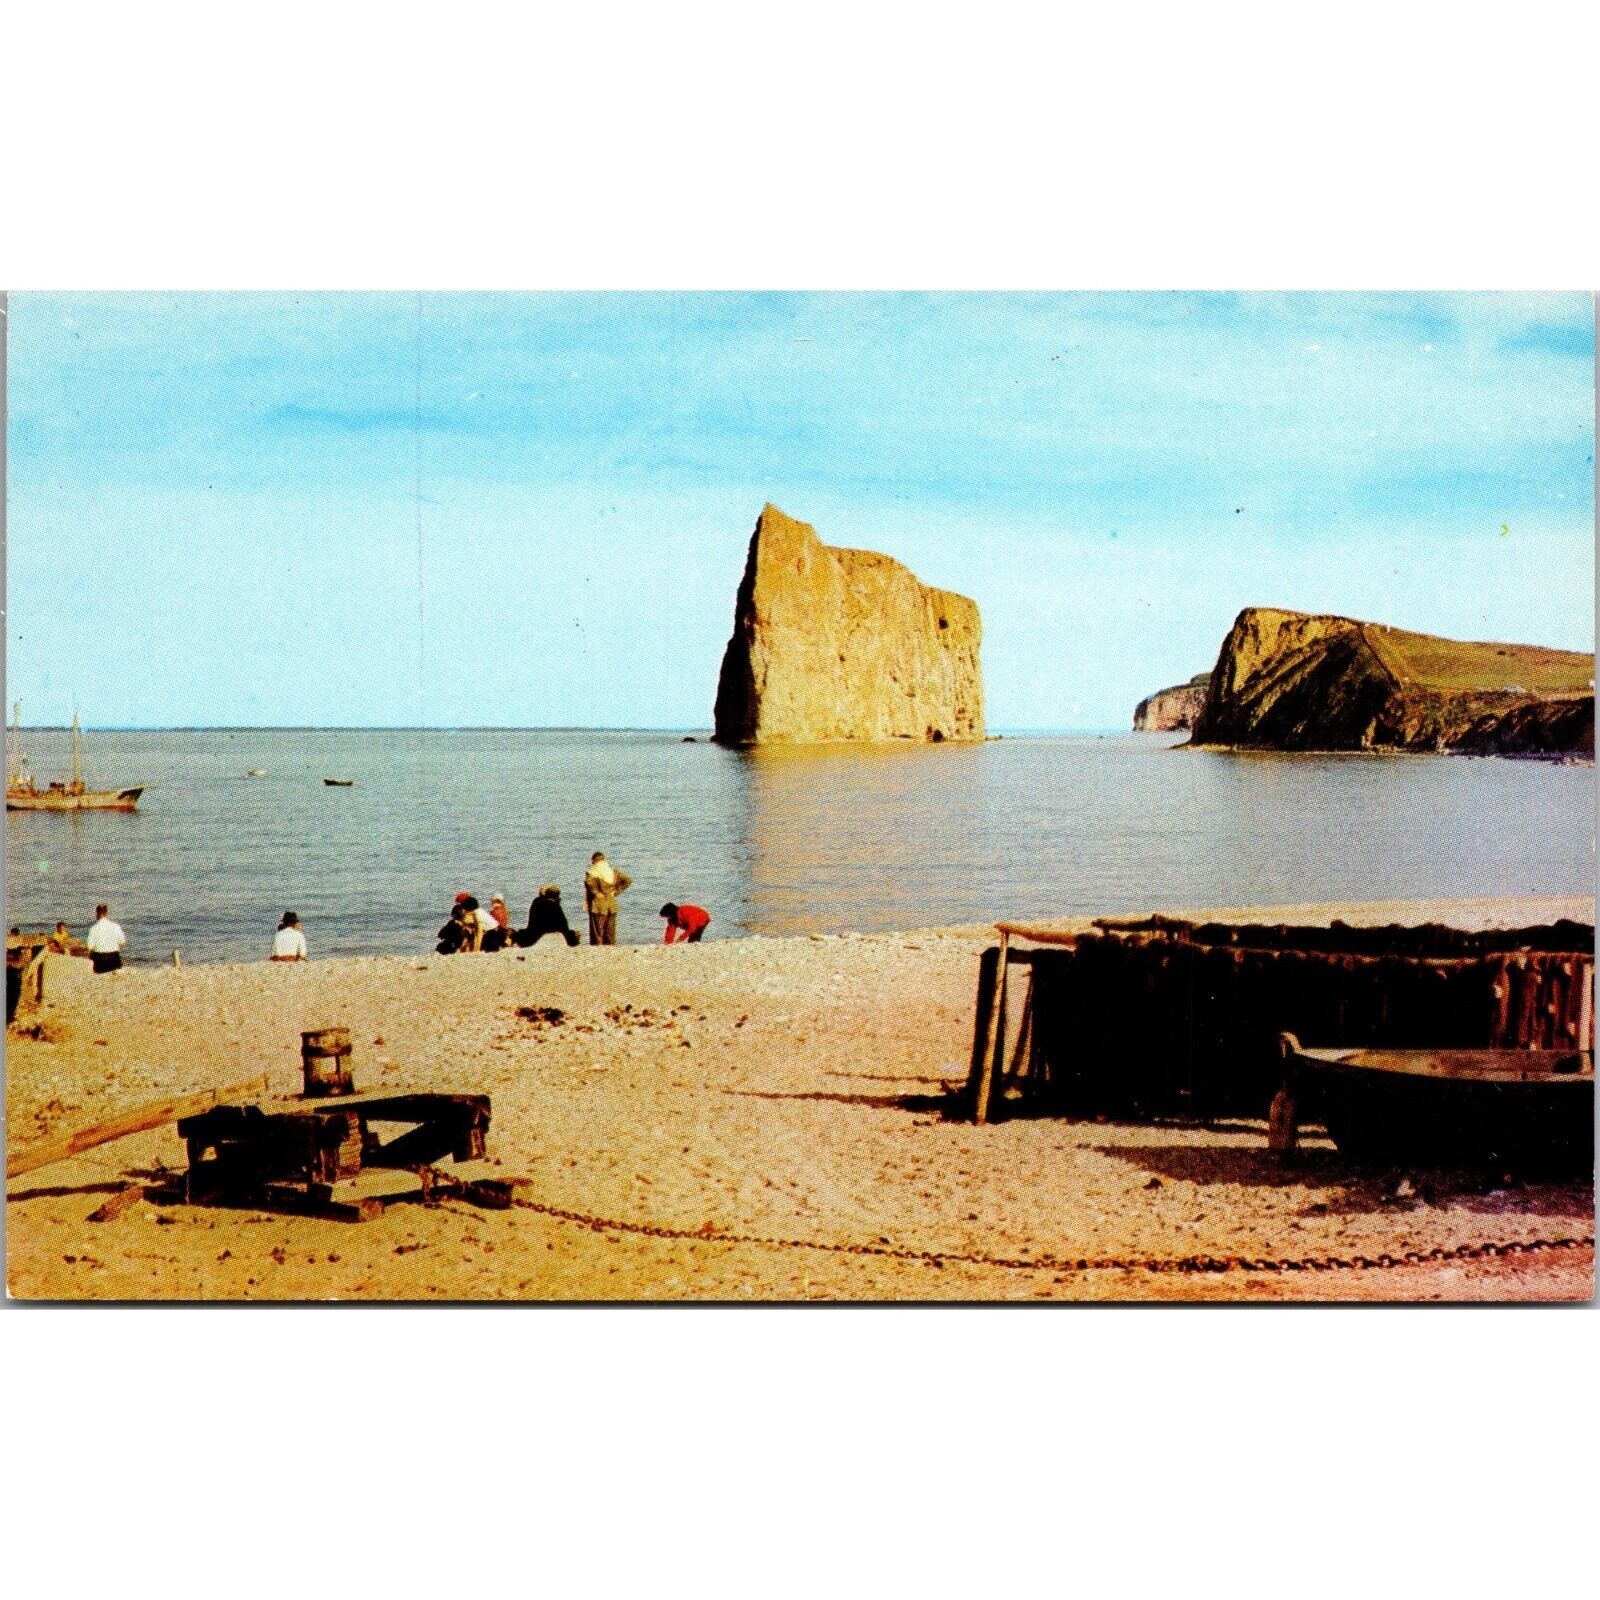 Percé Quebec Canada Postcard By Studio Bernard Featuring Percé Rock Beach Scene